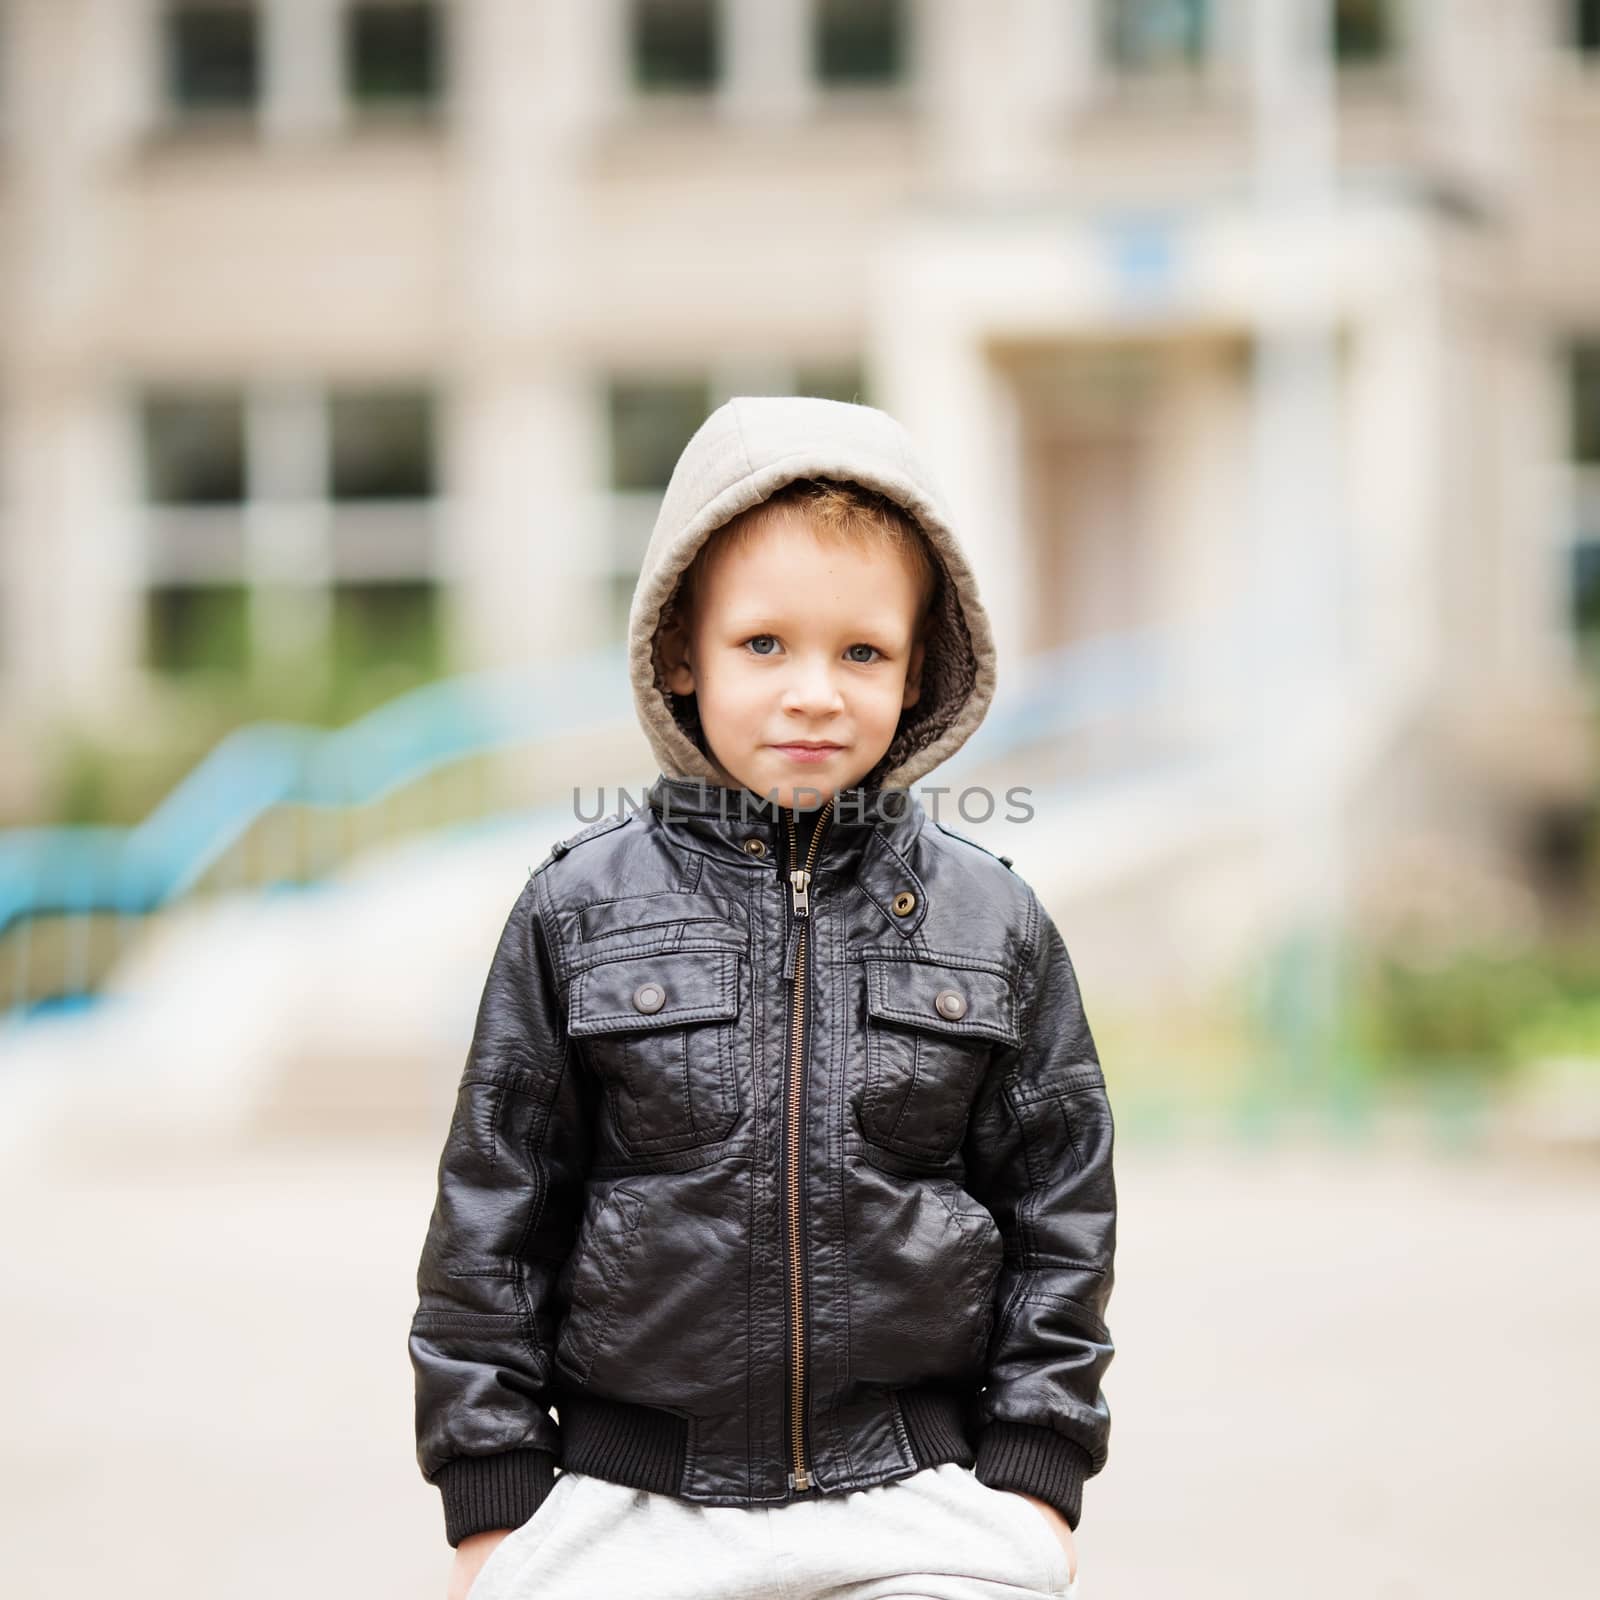 portrait of adorable little urban boy wearing black leather jacket. City style. Urban kids.